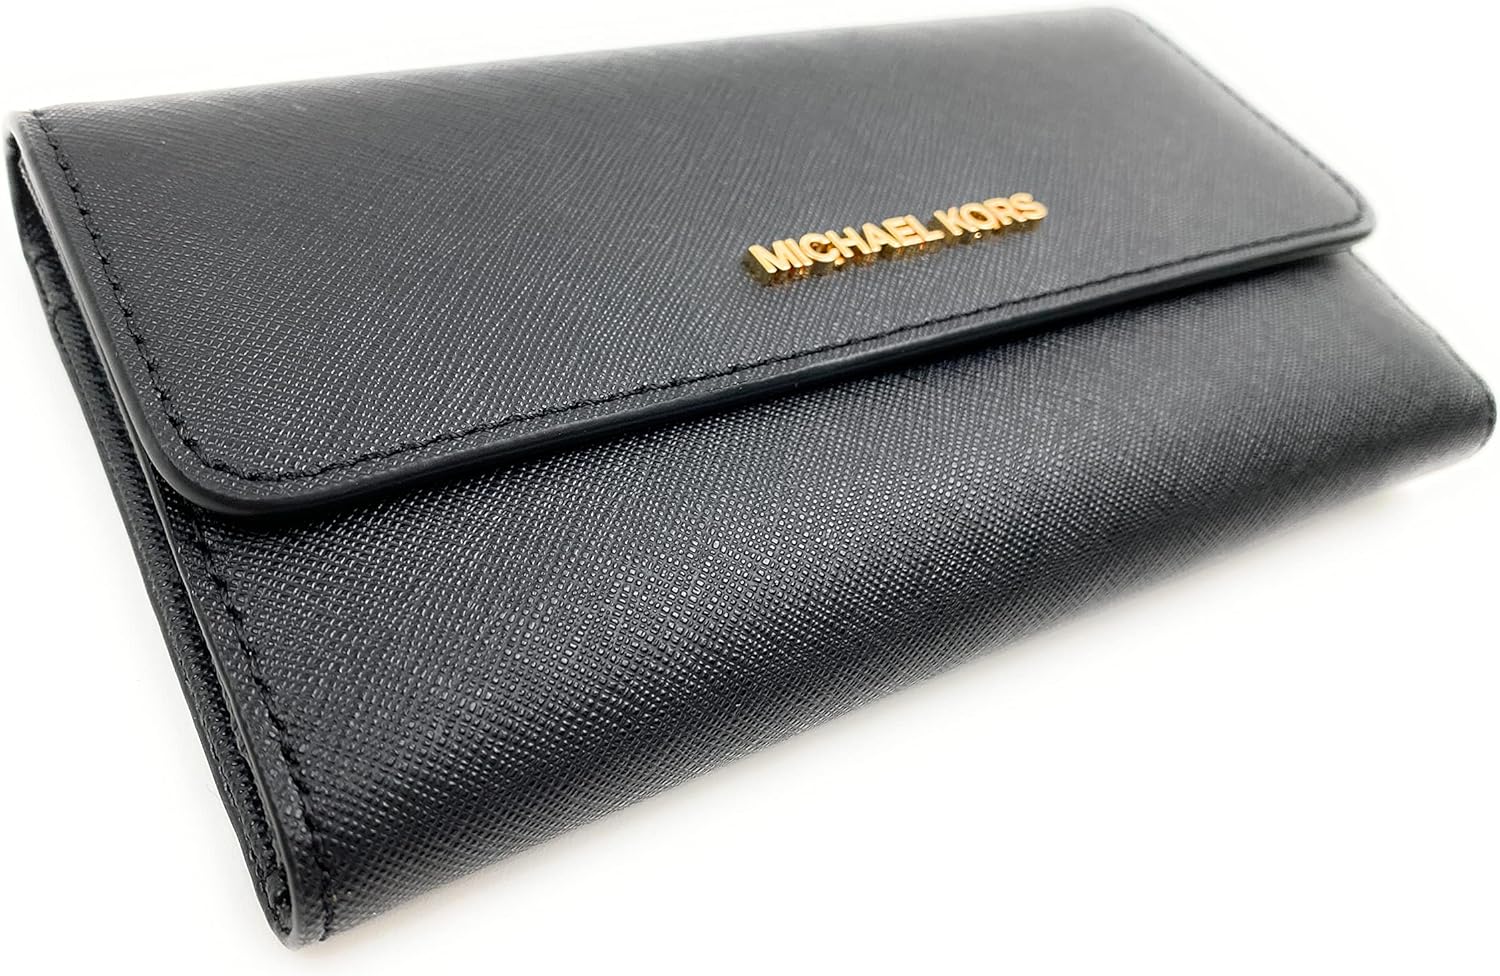 Michael Kors Women's Wallet Review - Go Girl Bags